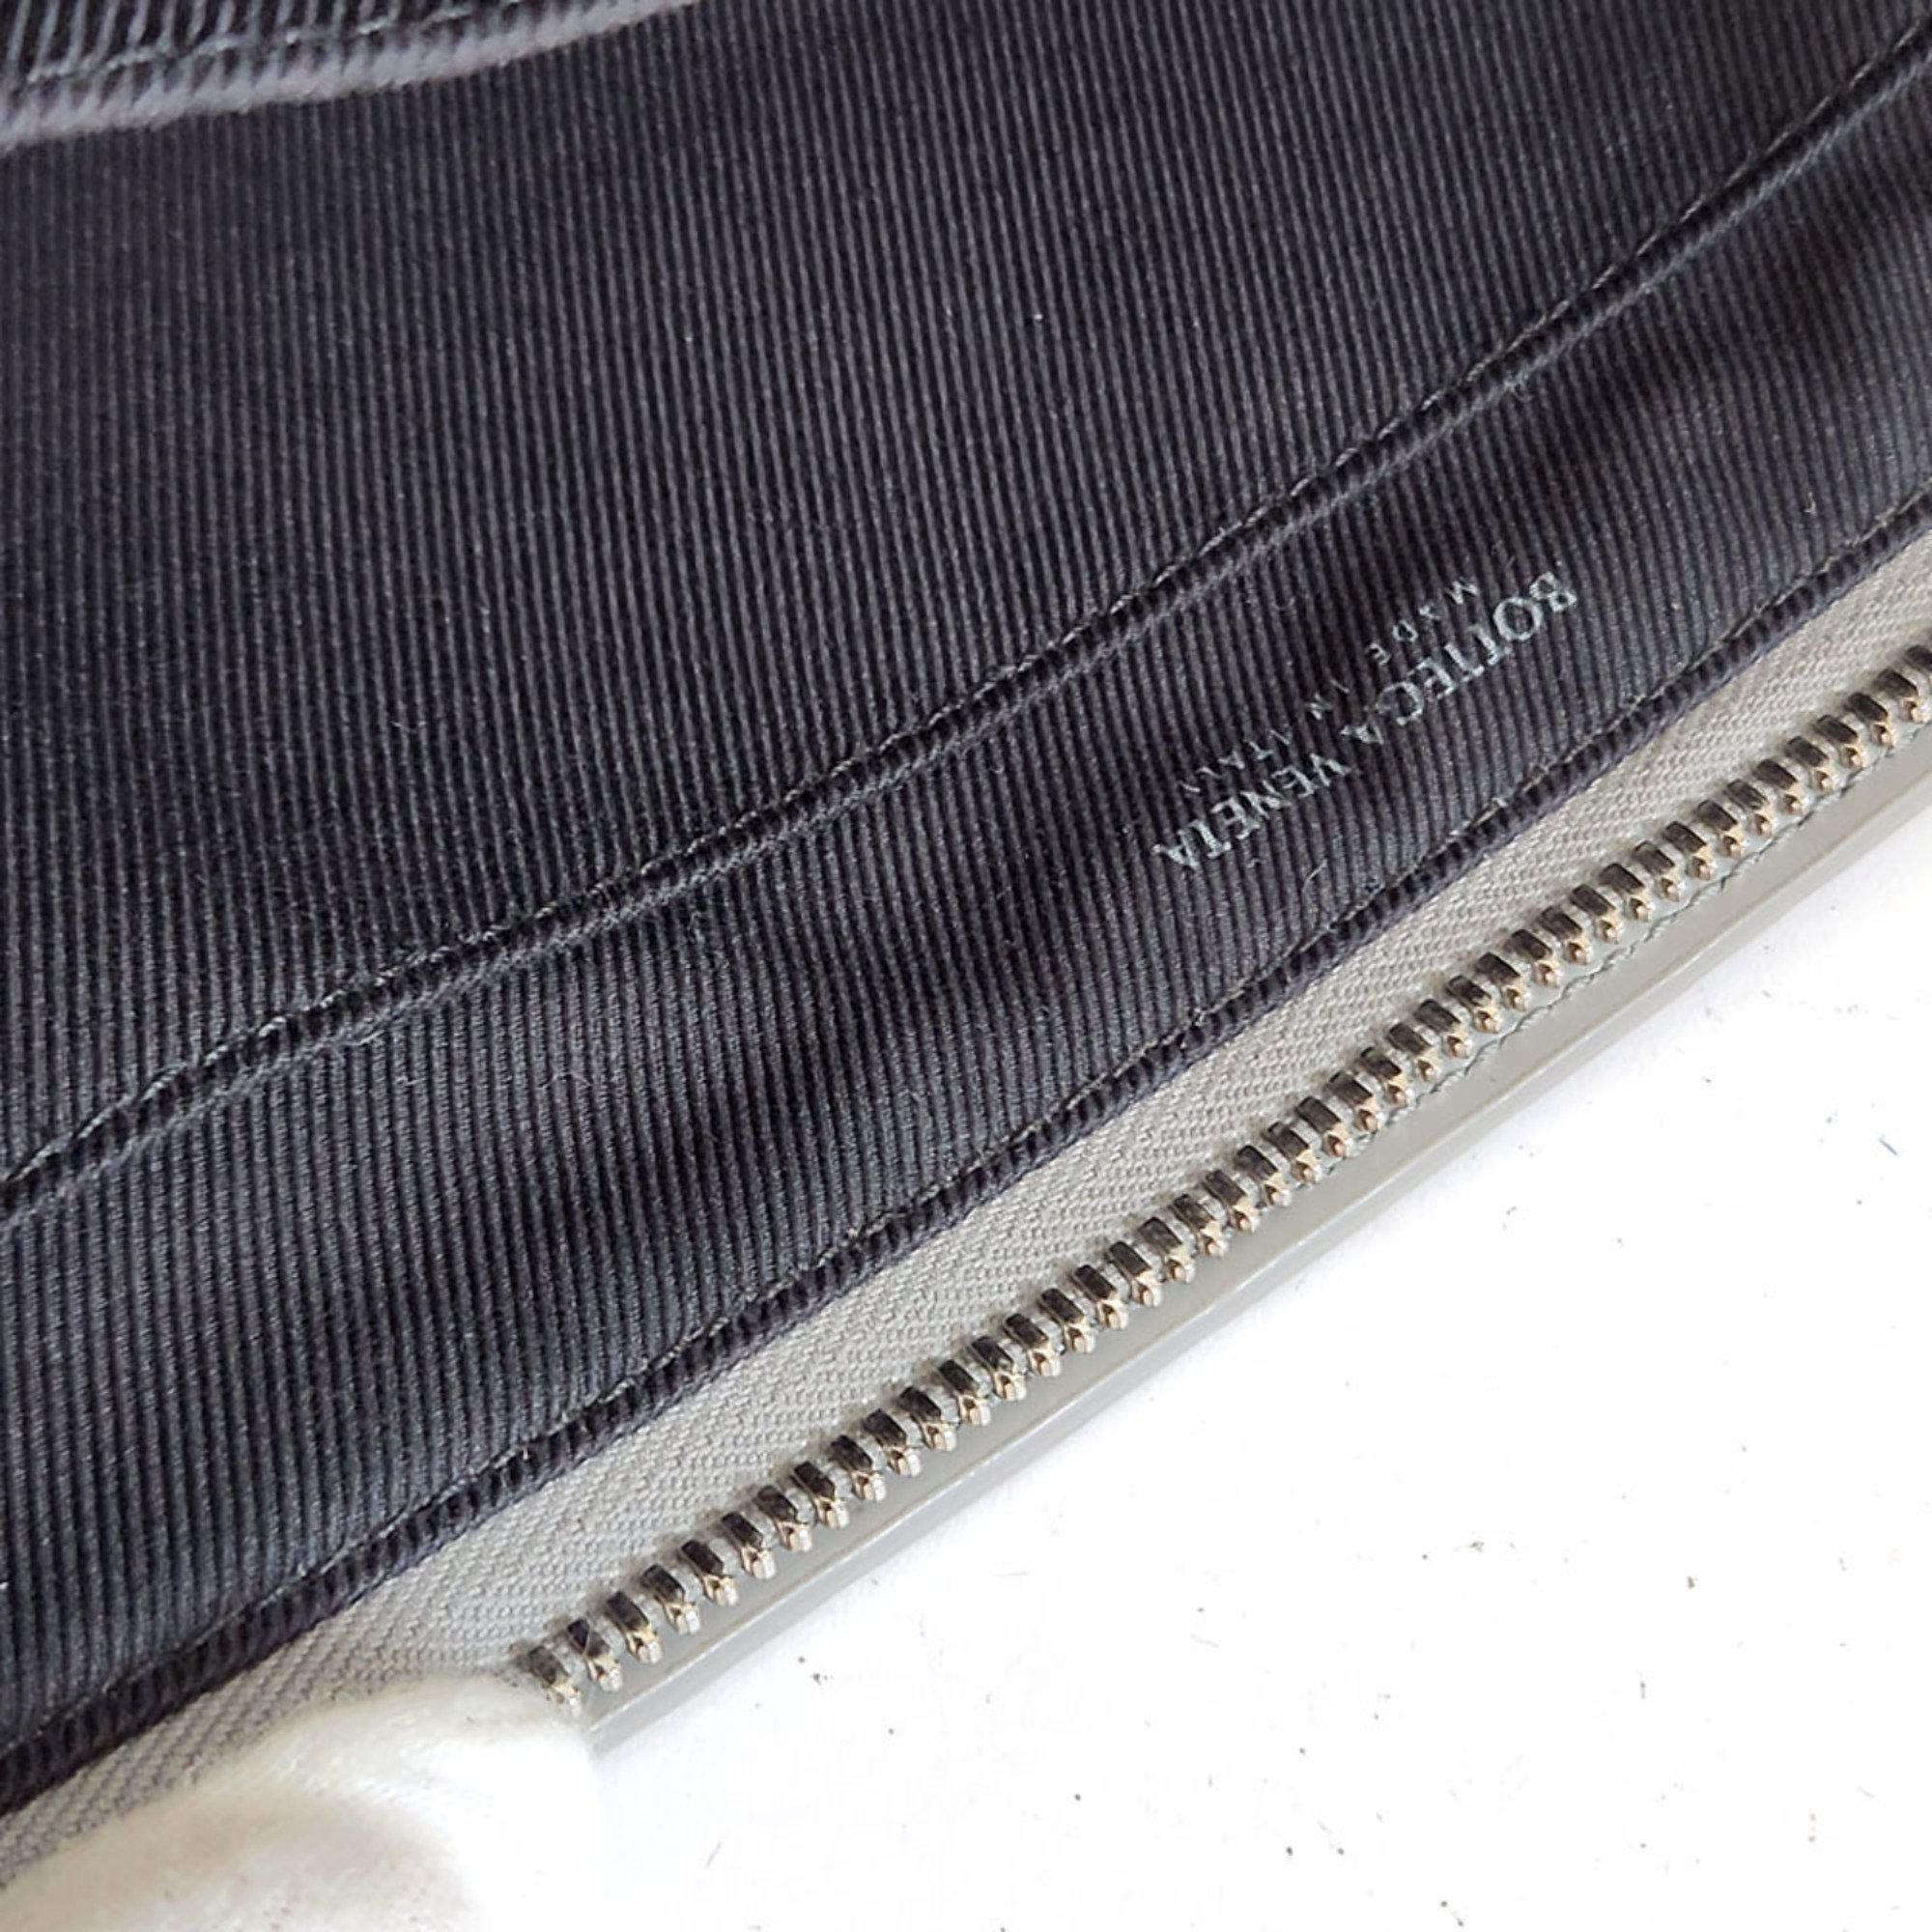 BOTTEGA VENETA Intrecciato Clutch Bag - Grey Leather Second for Men